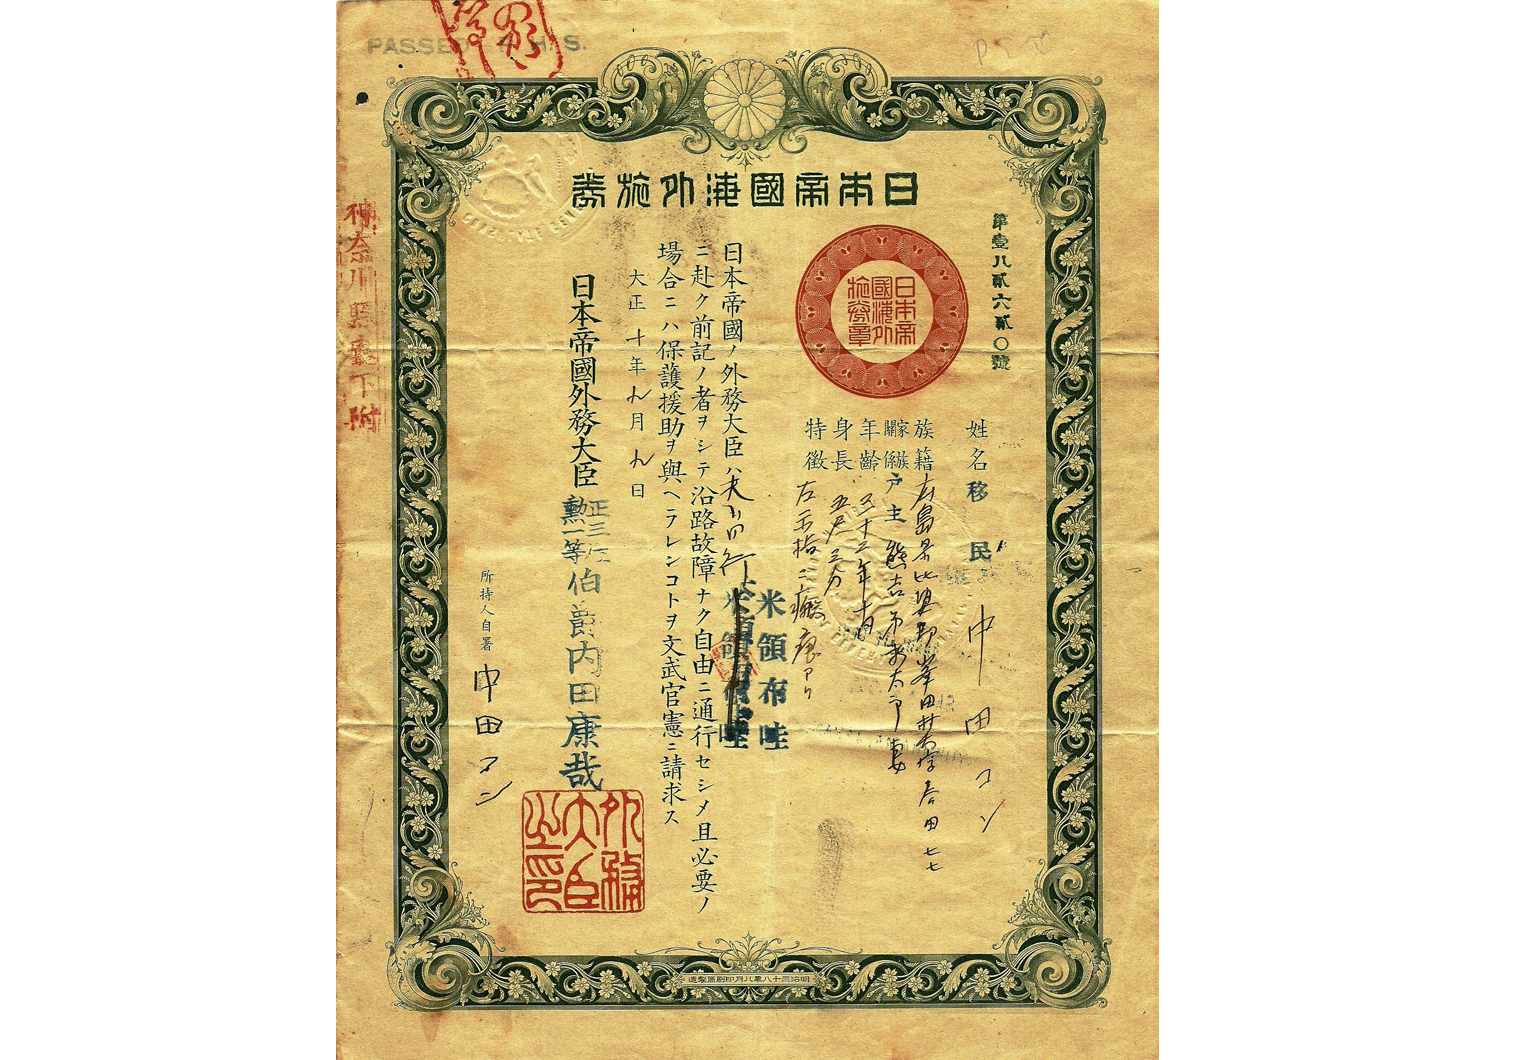 Early Japanese passport